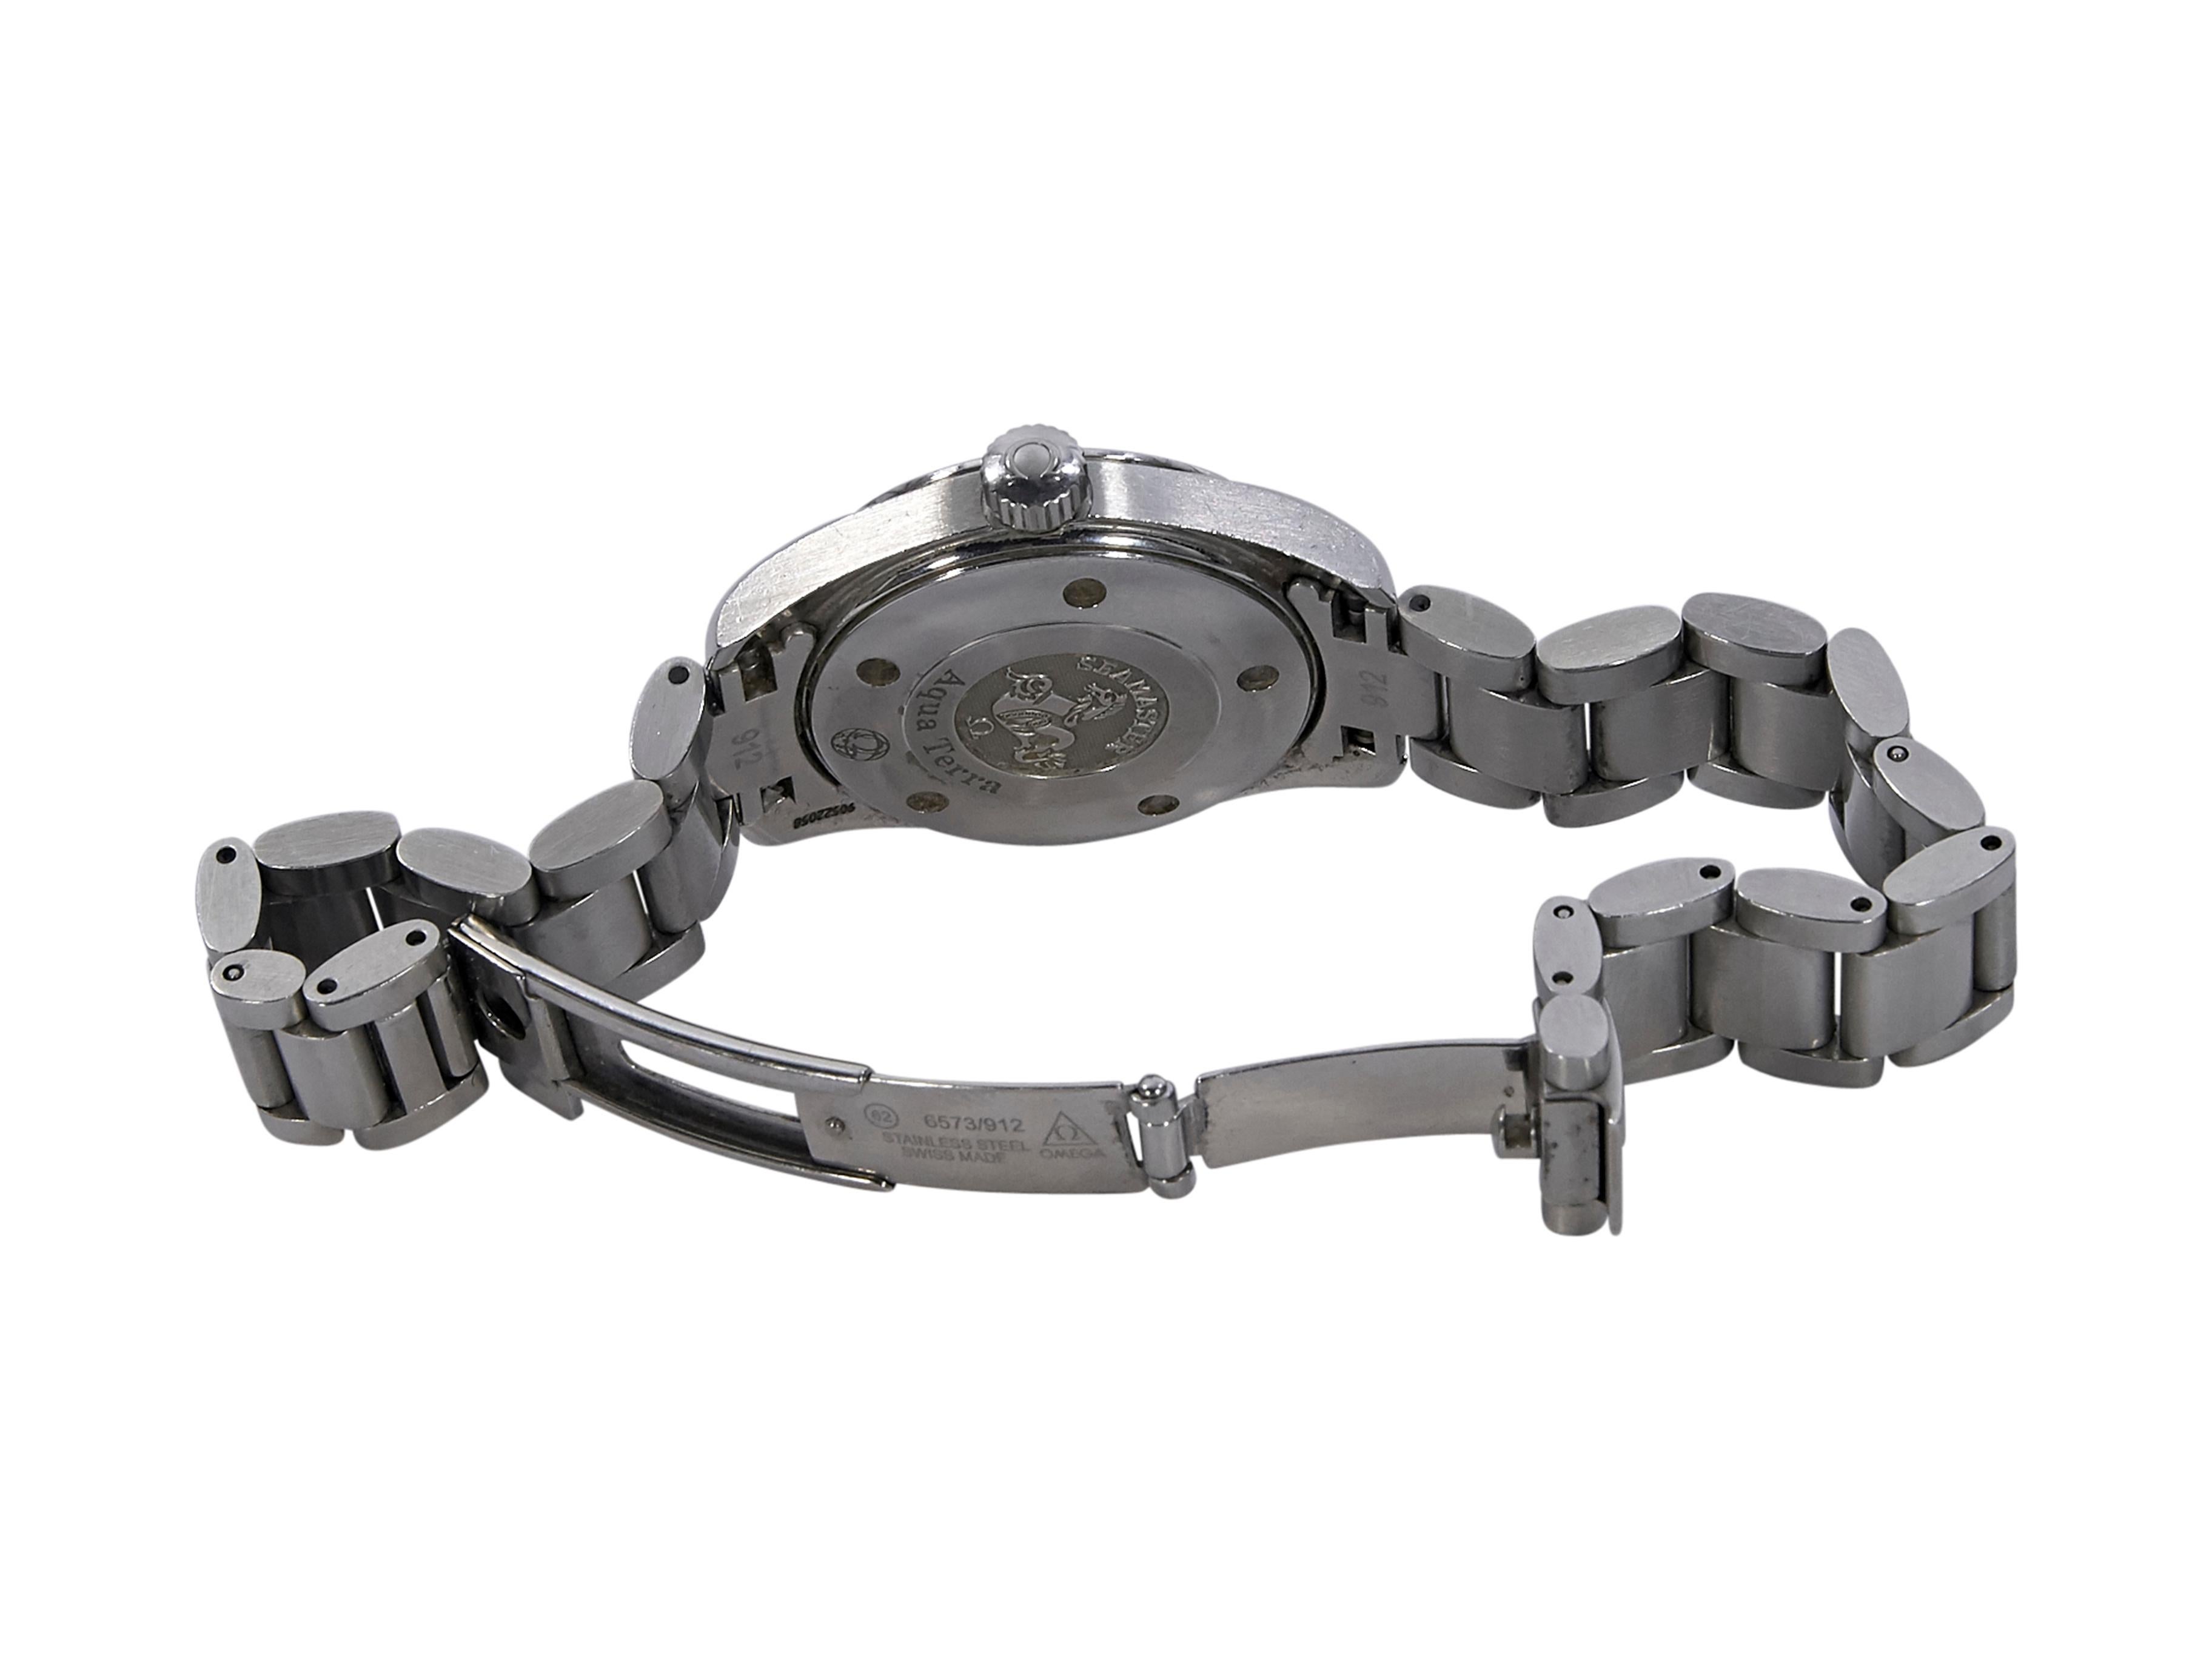 Women's Stainless Steel Omega Seamaster Bracelet Watch